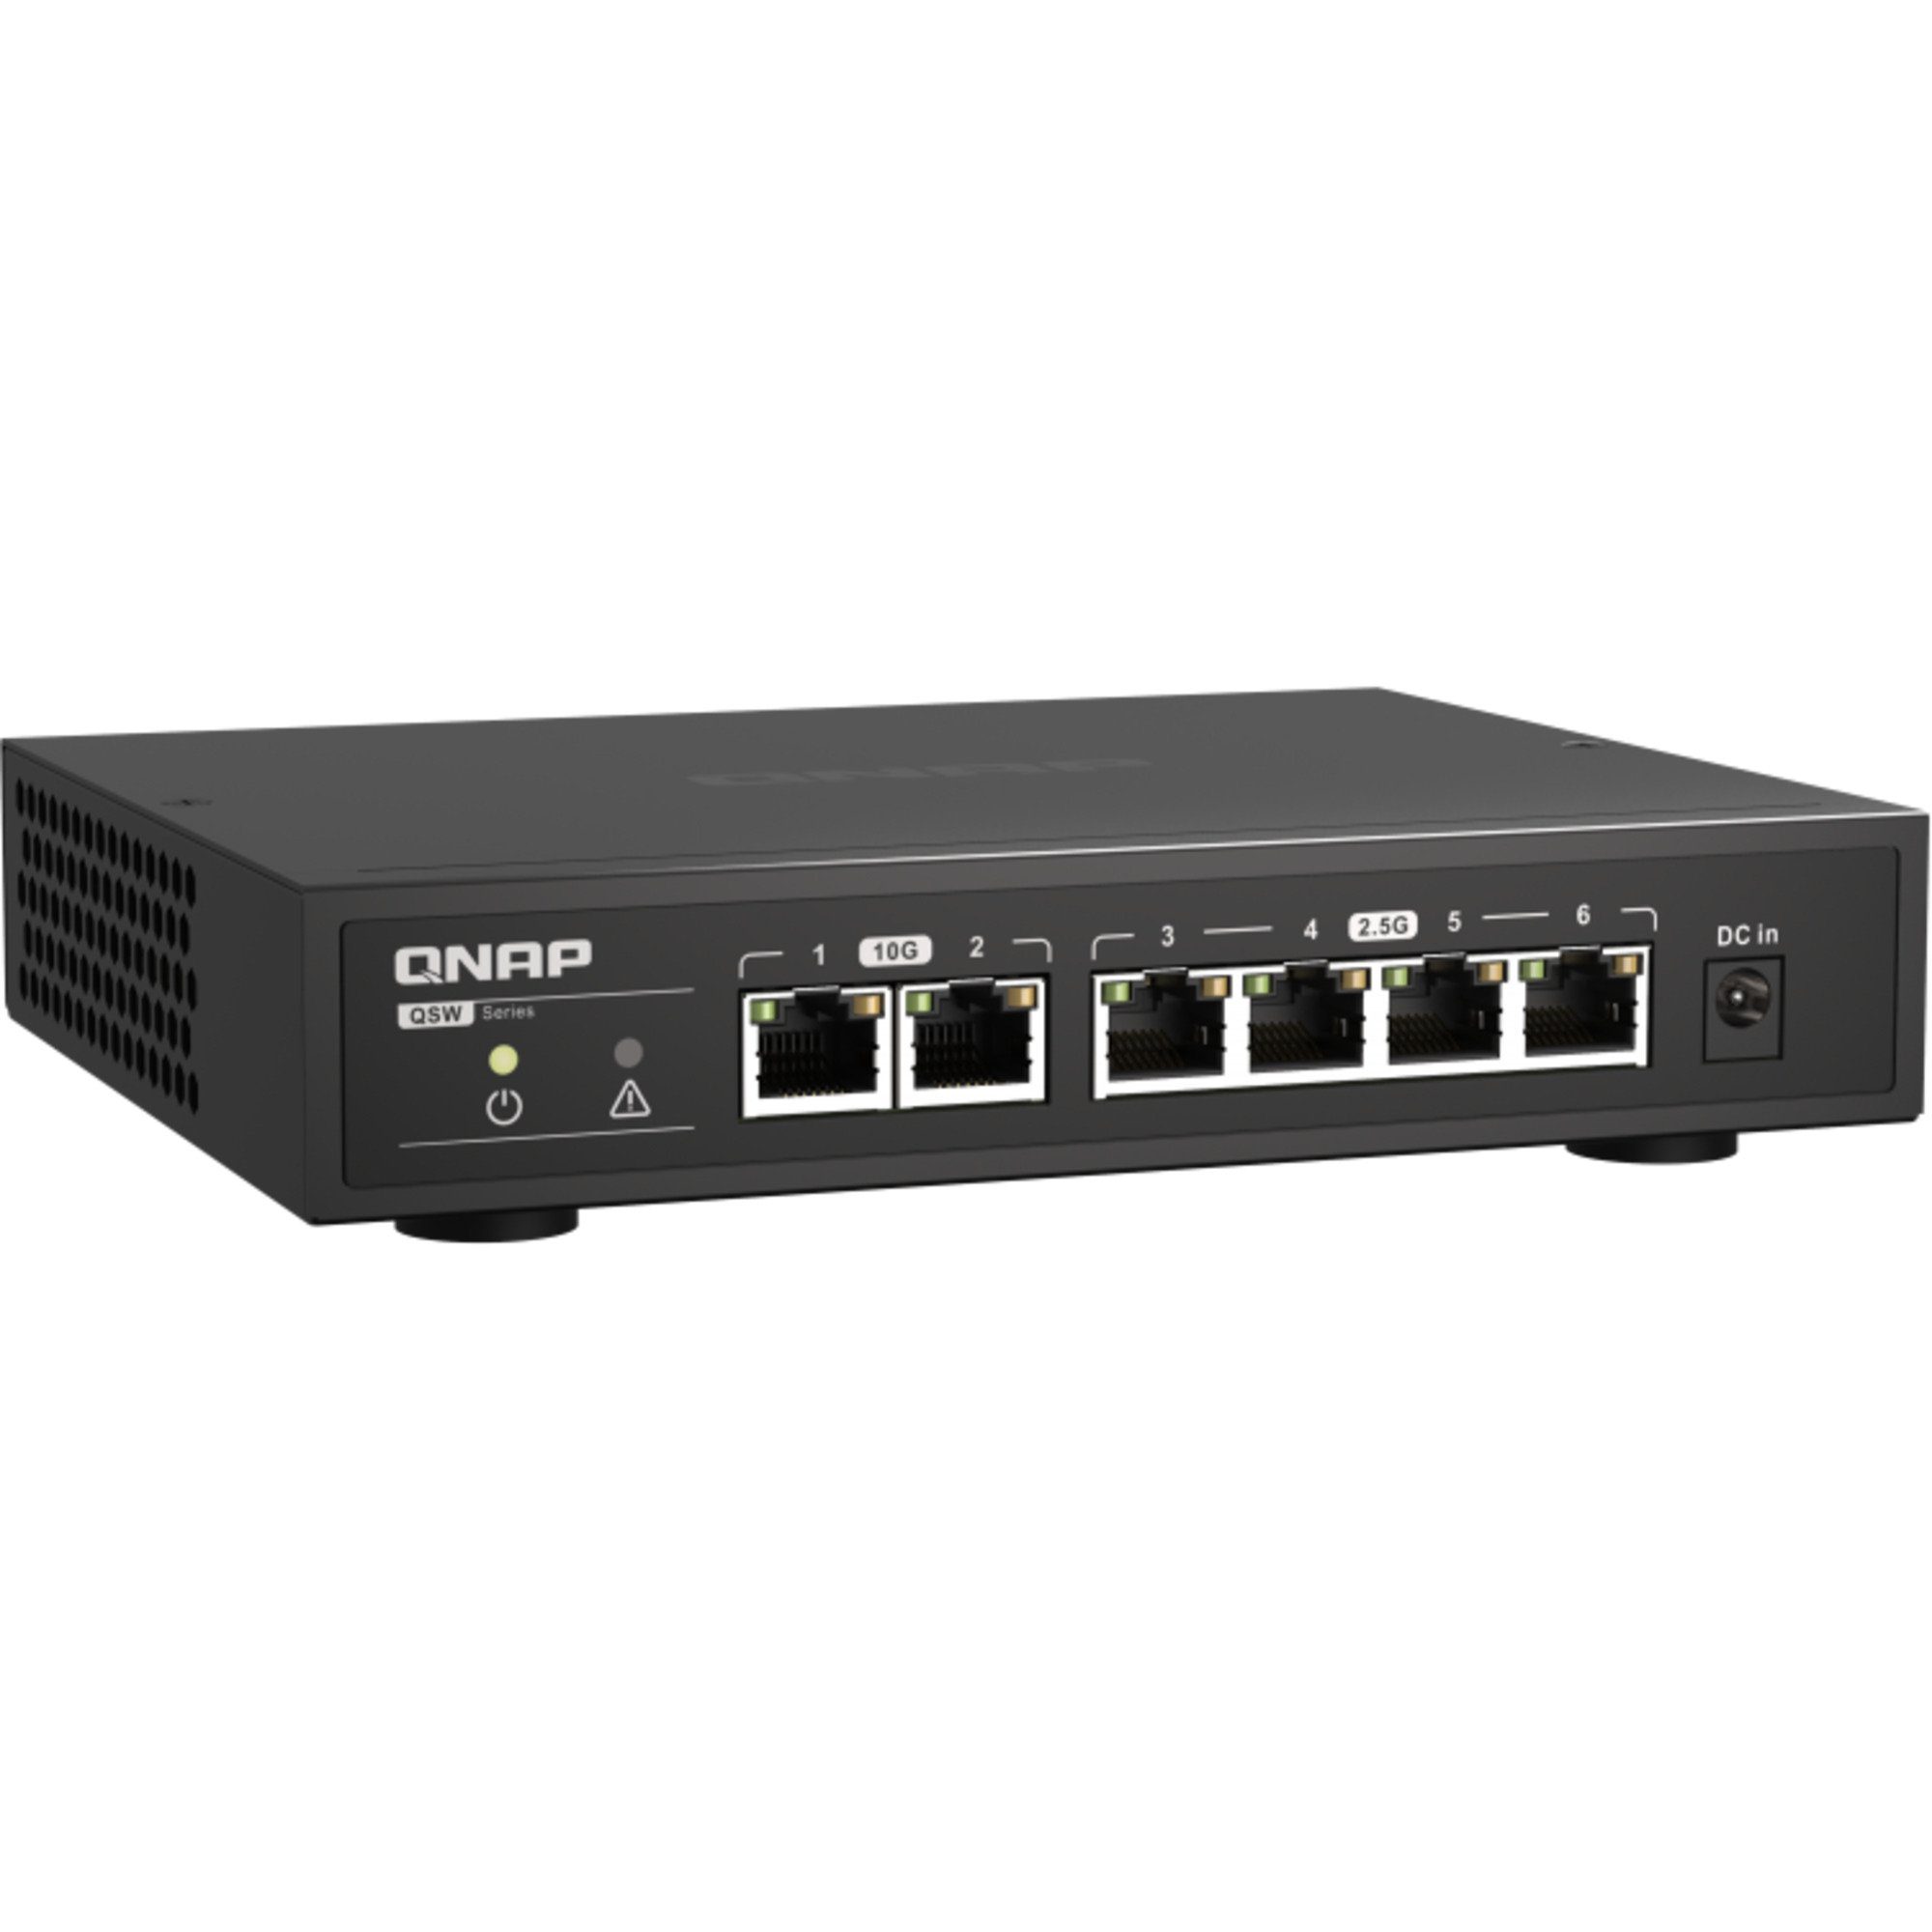 QNAP QNAP QSW-2104-2T, Switch Netzwerk-Switch | Switch